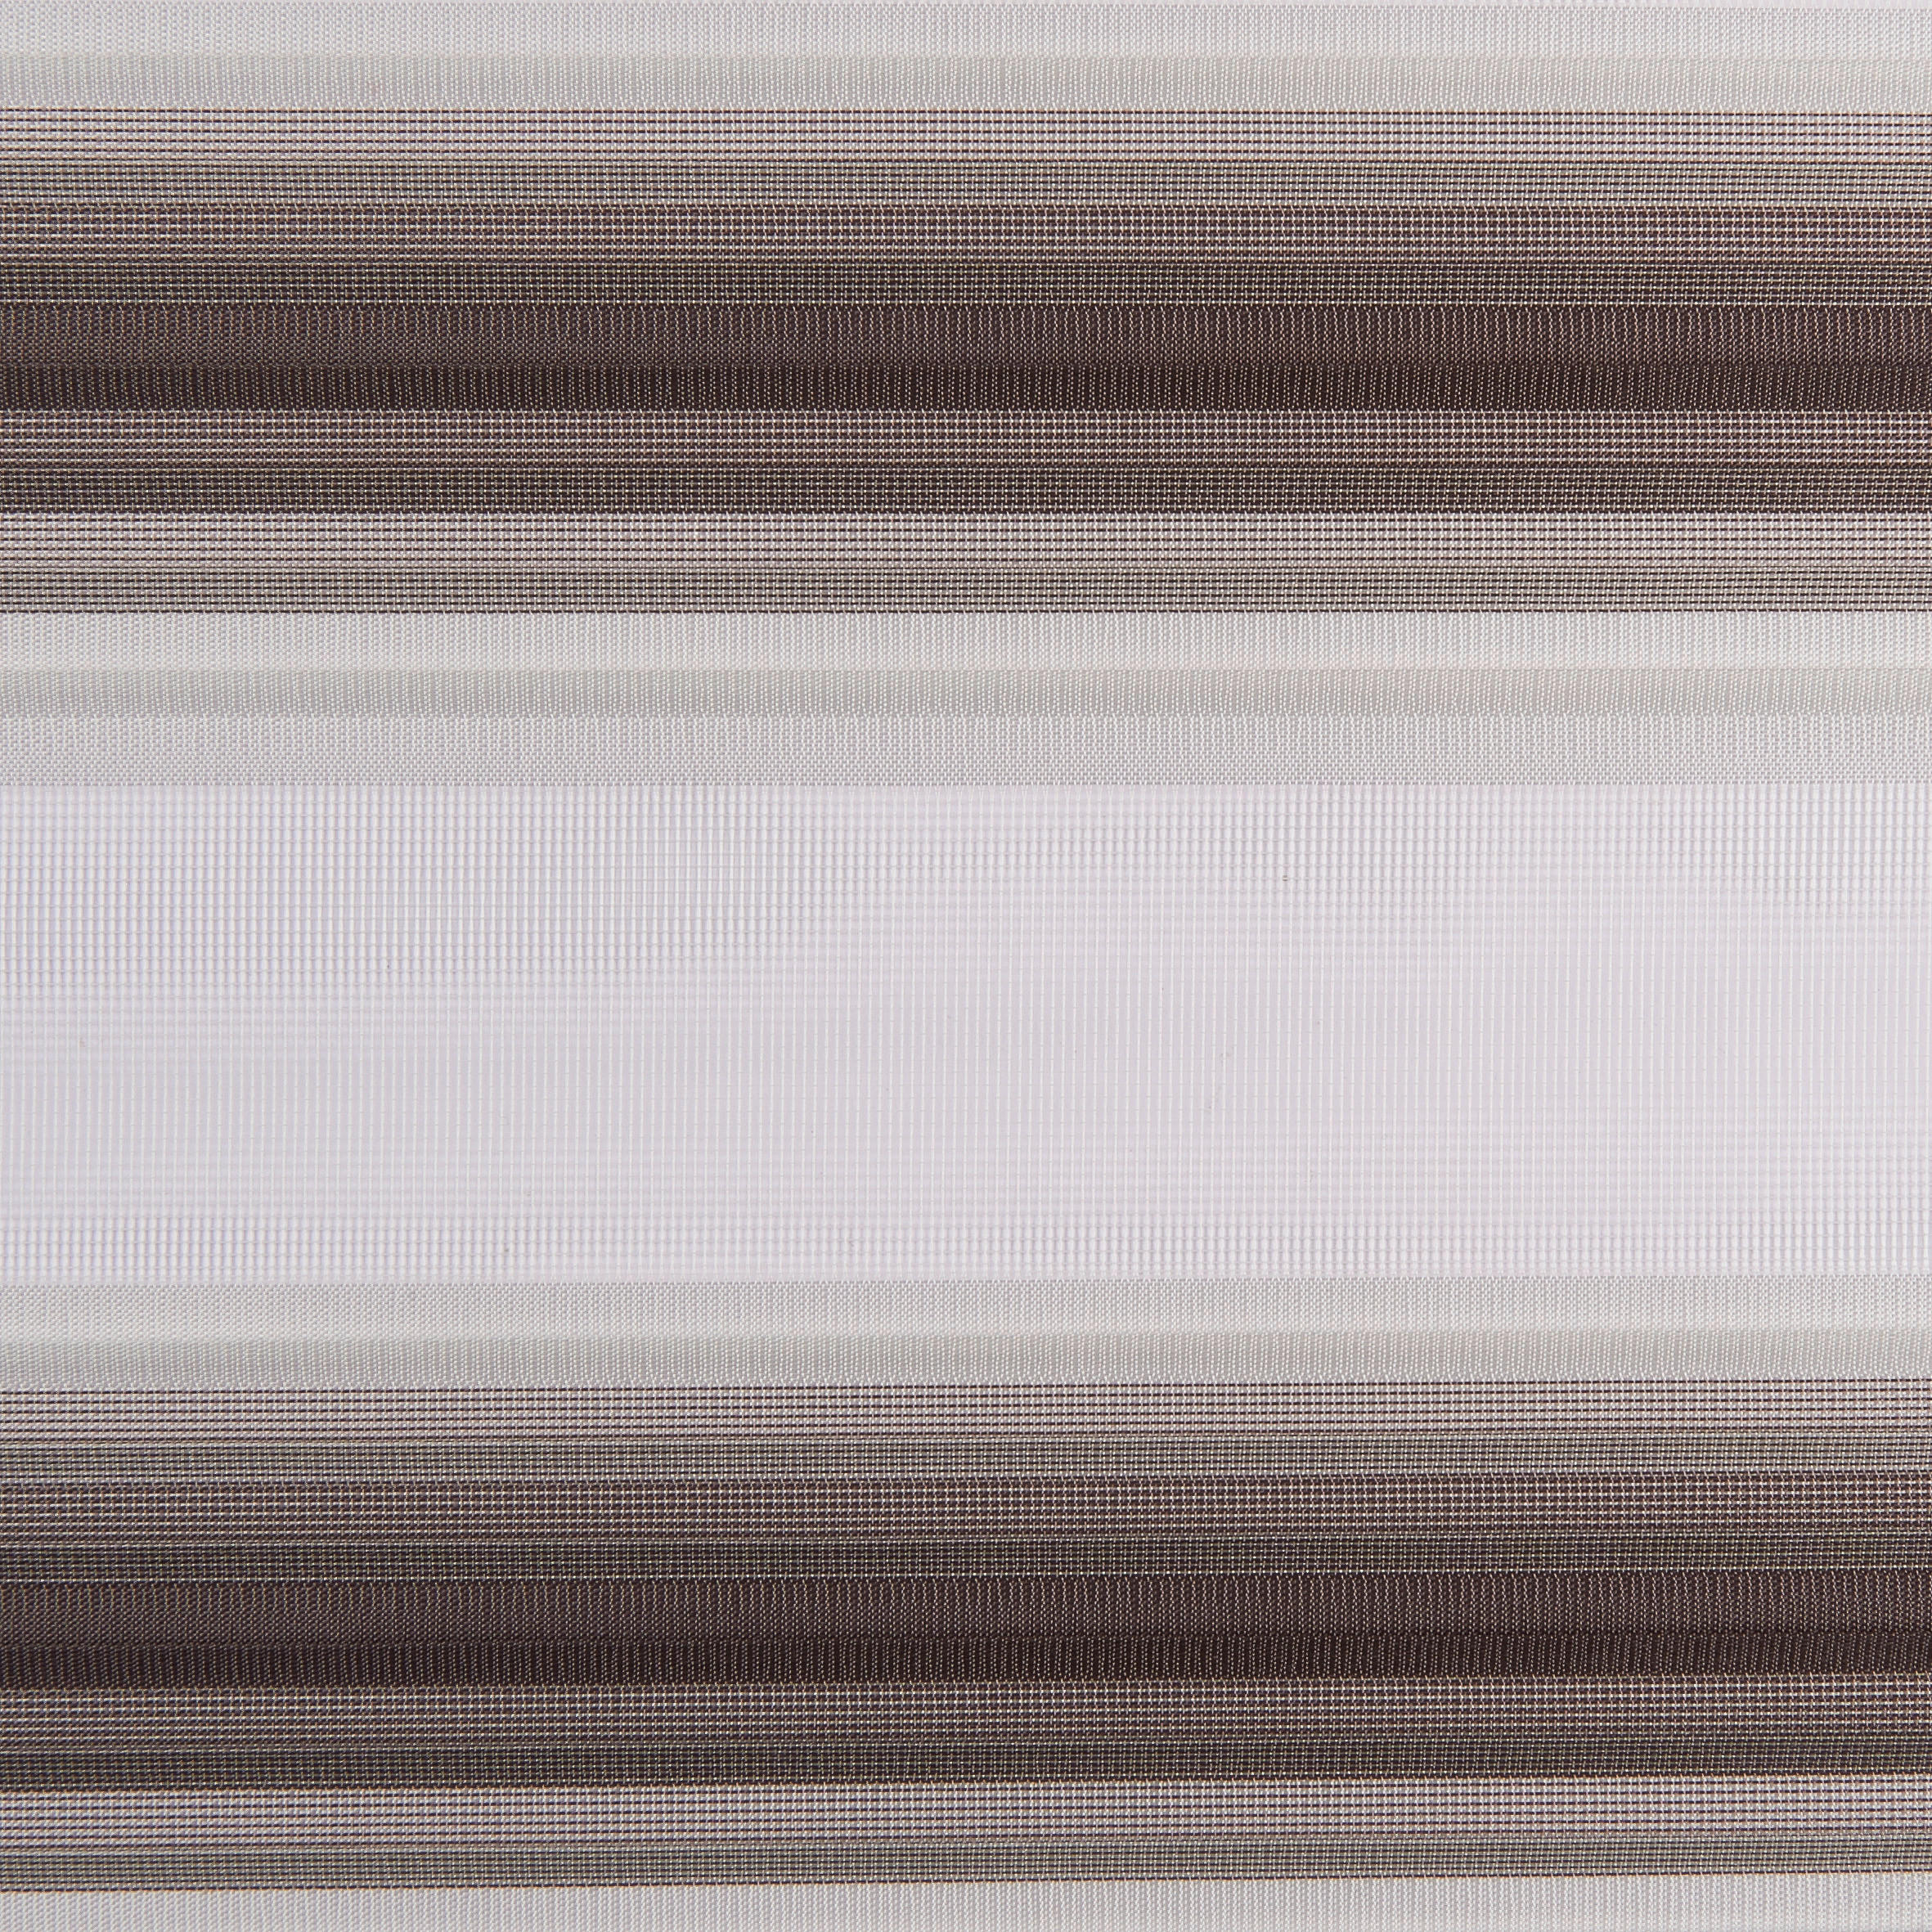 Schiebevorhang Timba grau B/L: ca. 60x245 cm Timba - grau (60,00/245,00cm) - POCOline